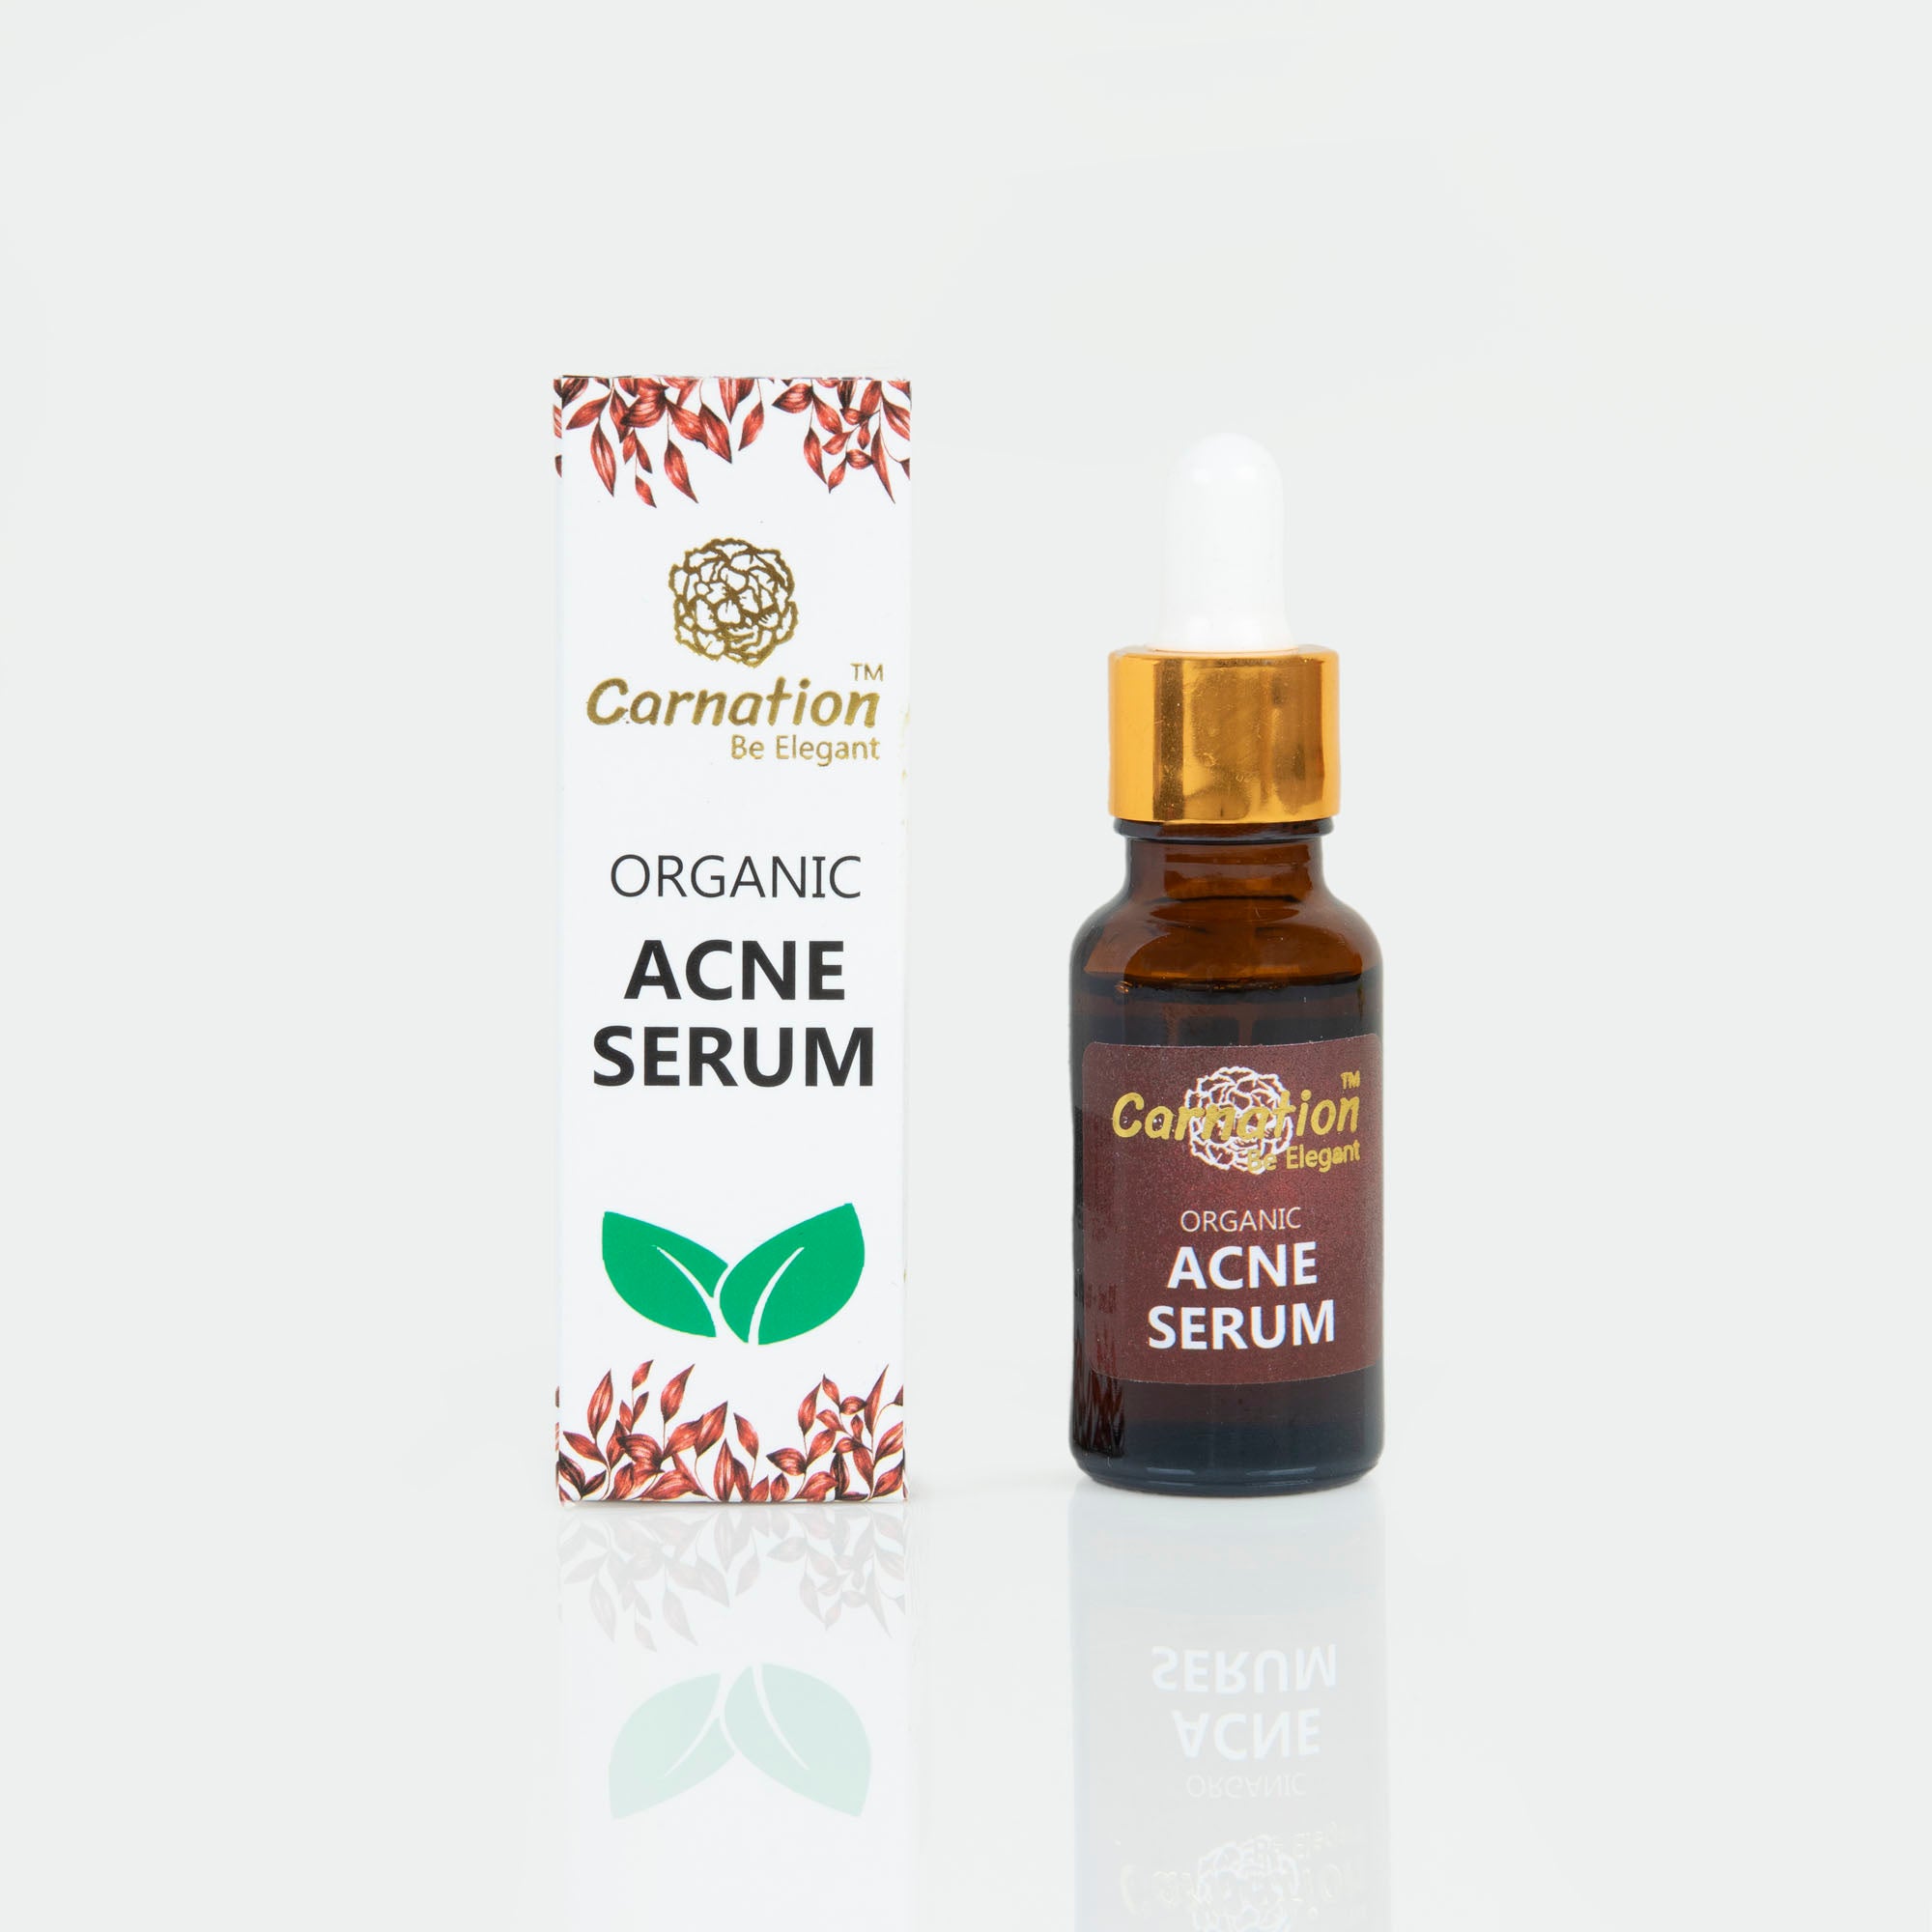 Acne clearing serum